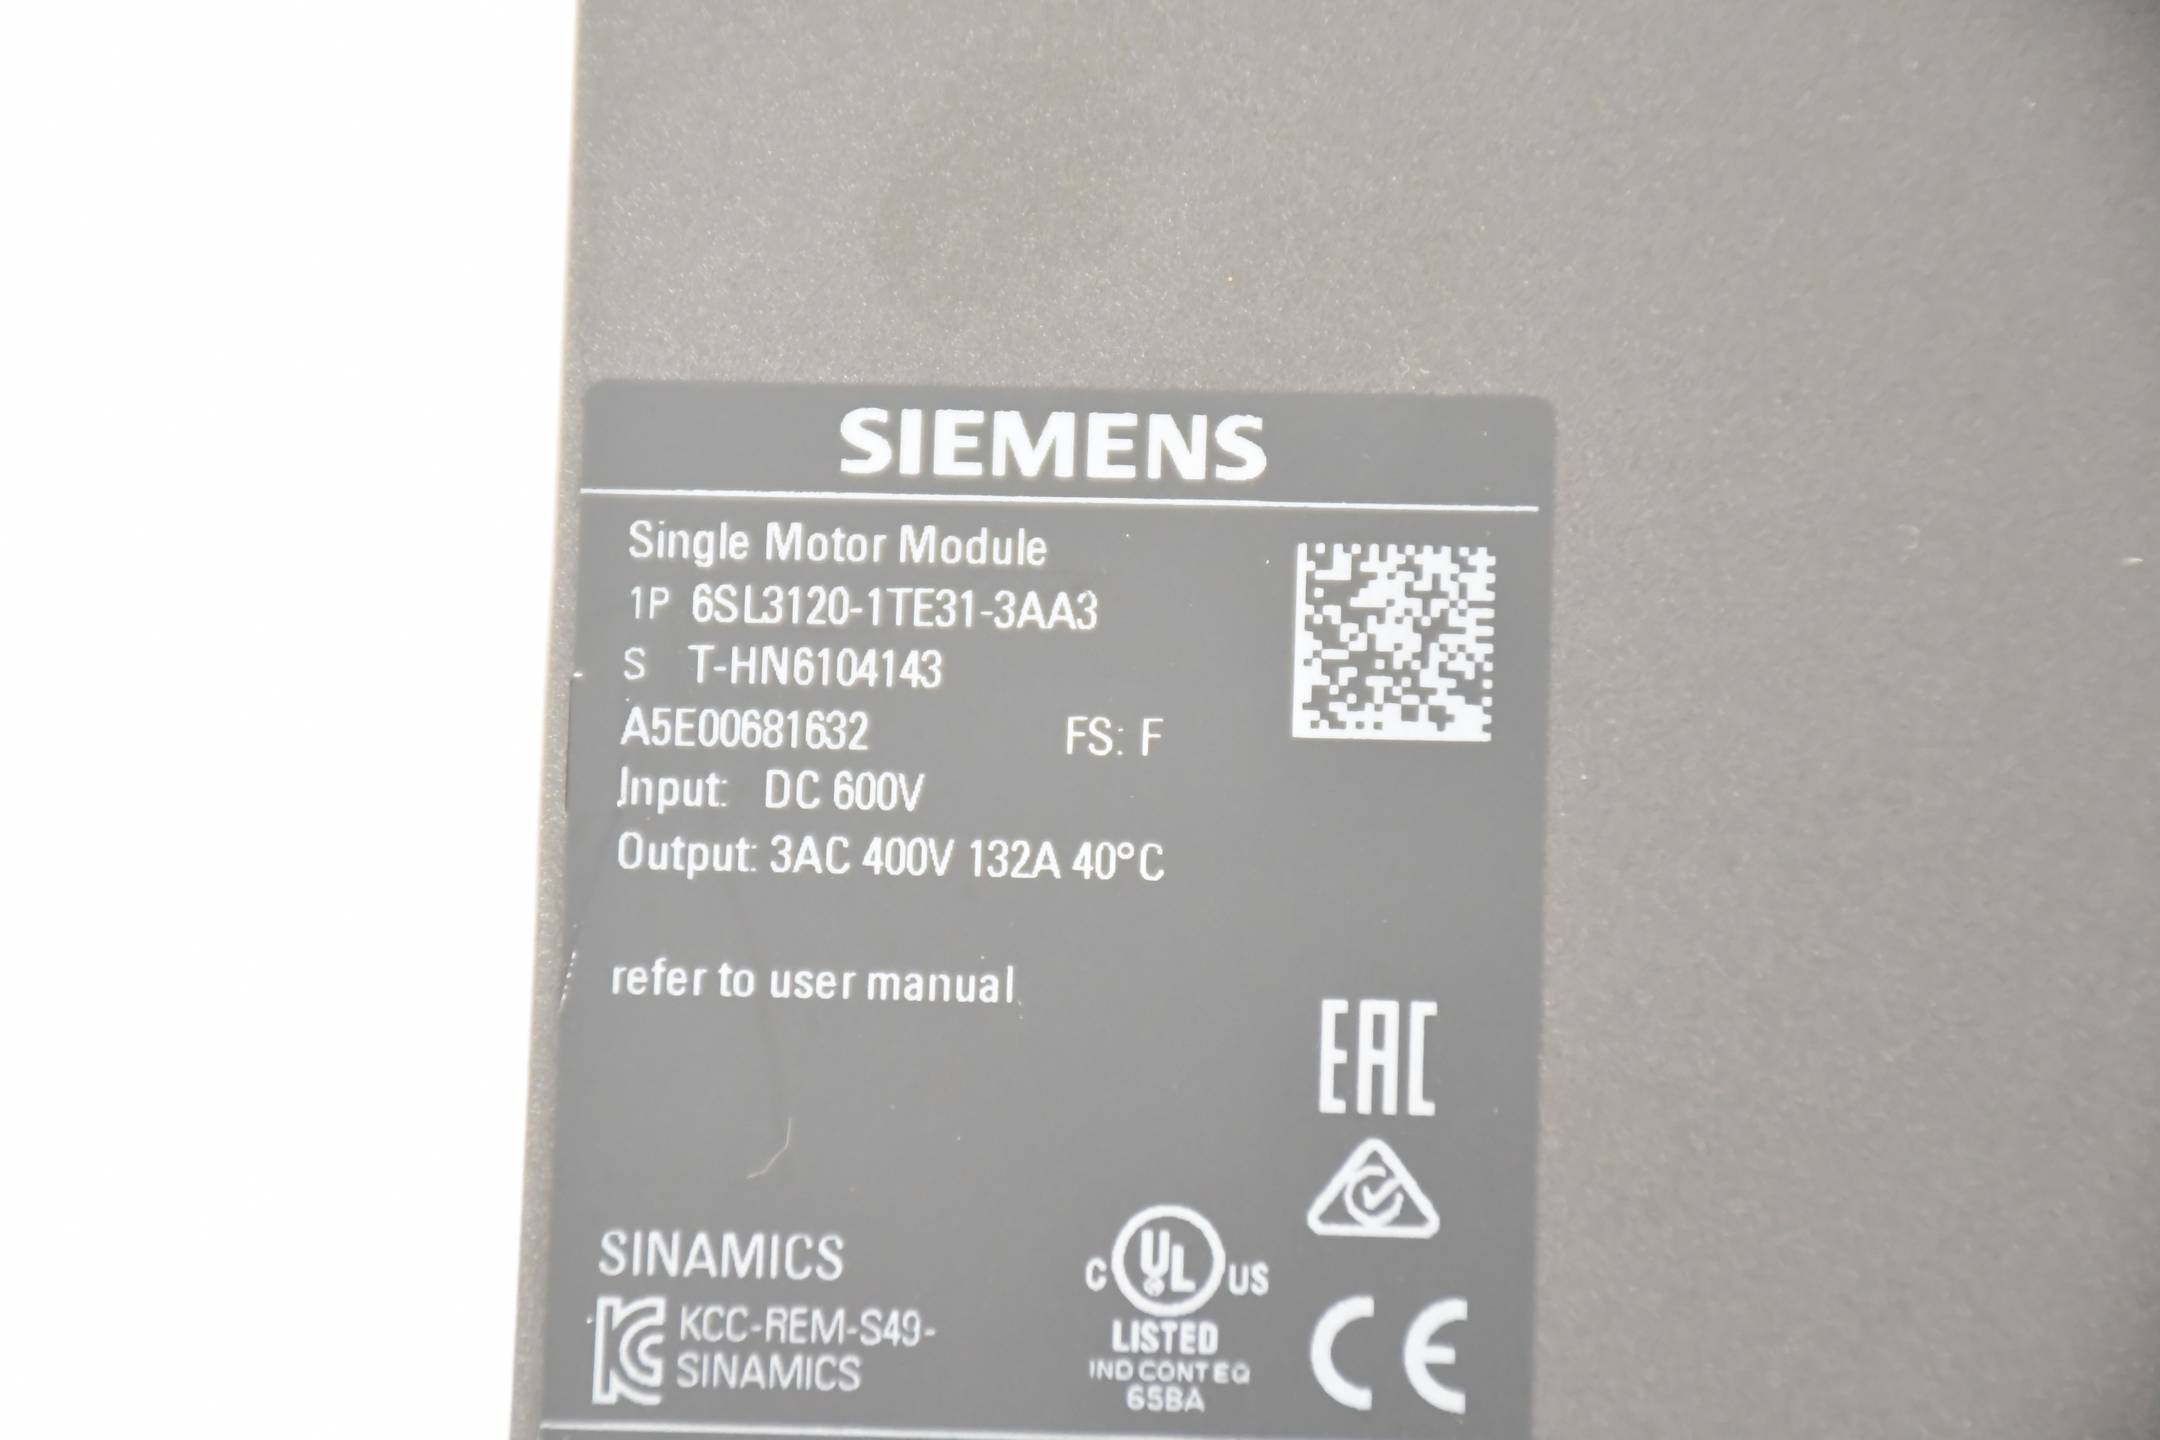 Siemens Sinamics single motor module 6SL3120-1TE31-3AA3 6SL3 120-1TE31-3AA3 E. F